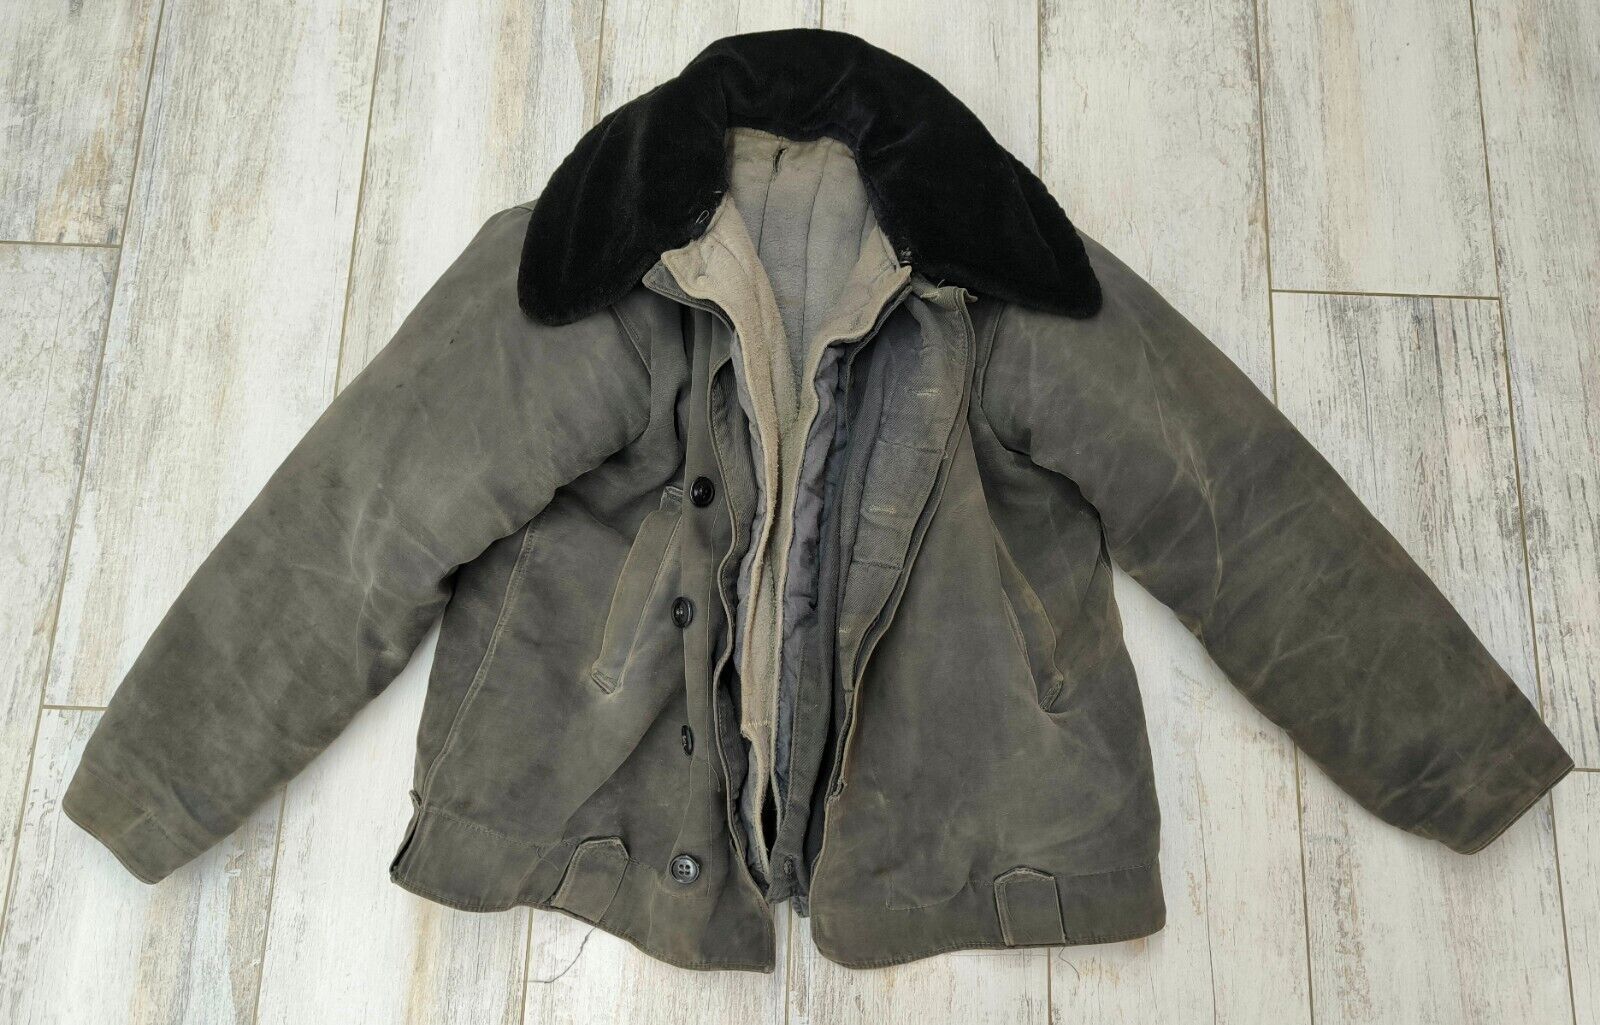 Original USSR army winter jacket, size 46/2, officer's padded jacket